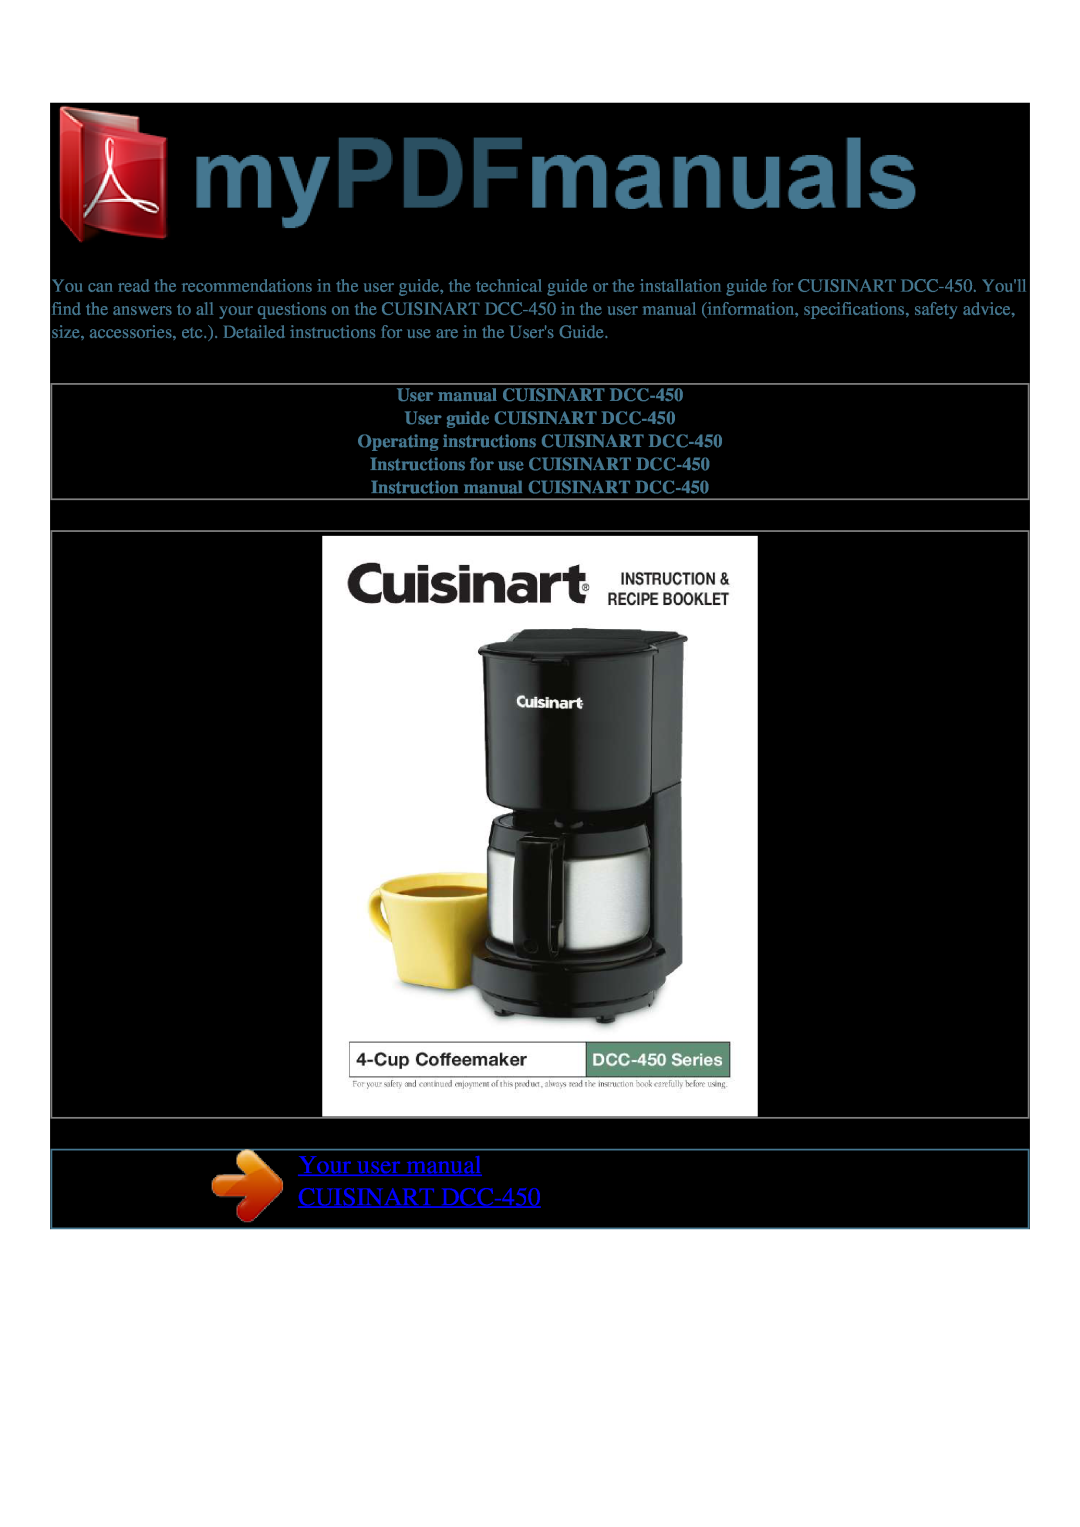 Cuisinart user manual Your user manual CUISINART DCC-450, User manual CUISINART DCC-450 User guide CUISINART DCC-450 